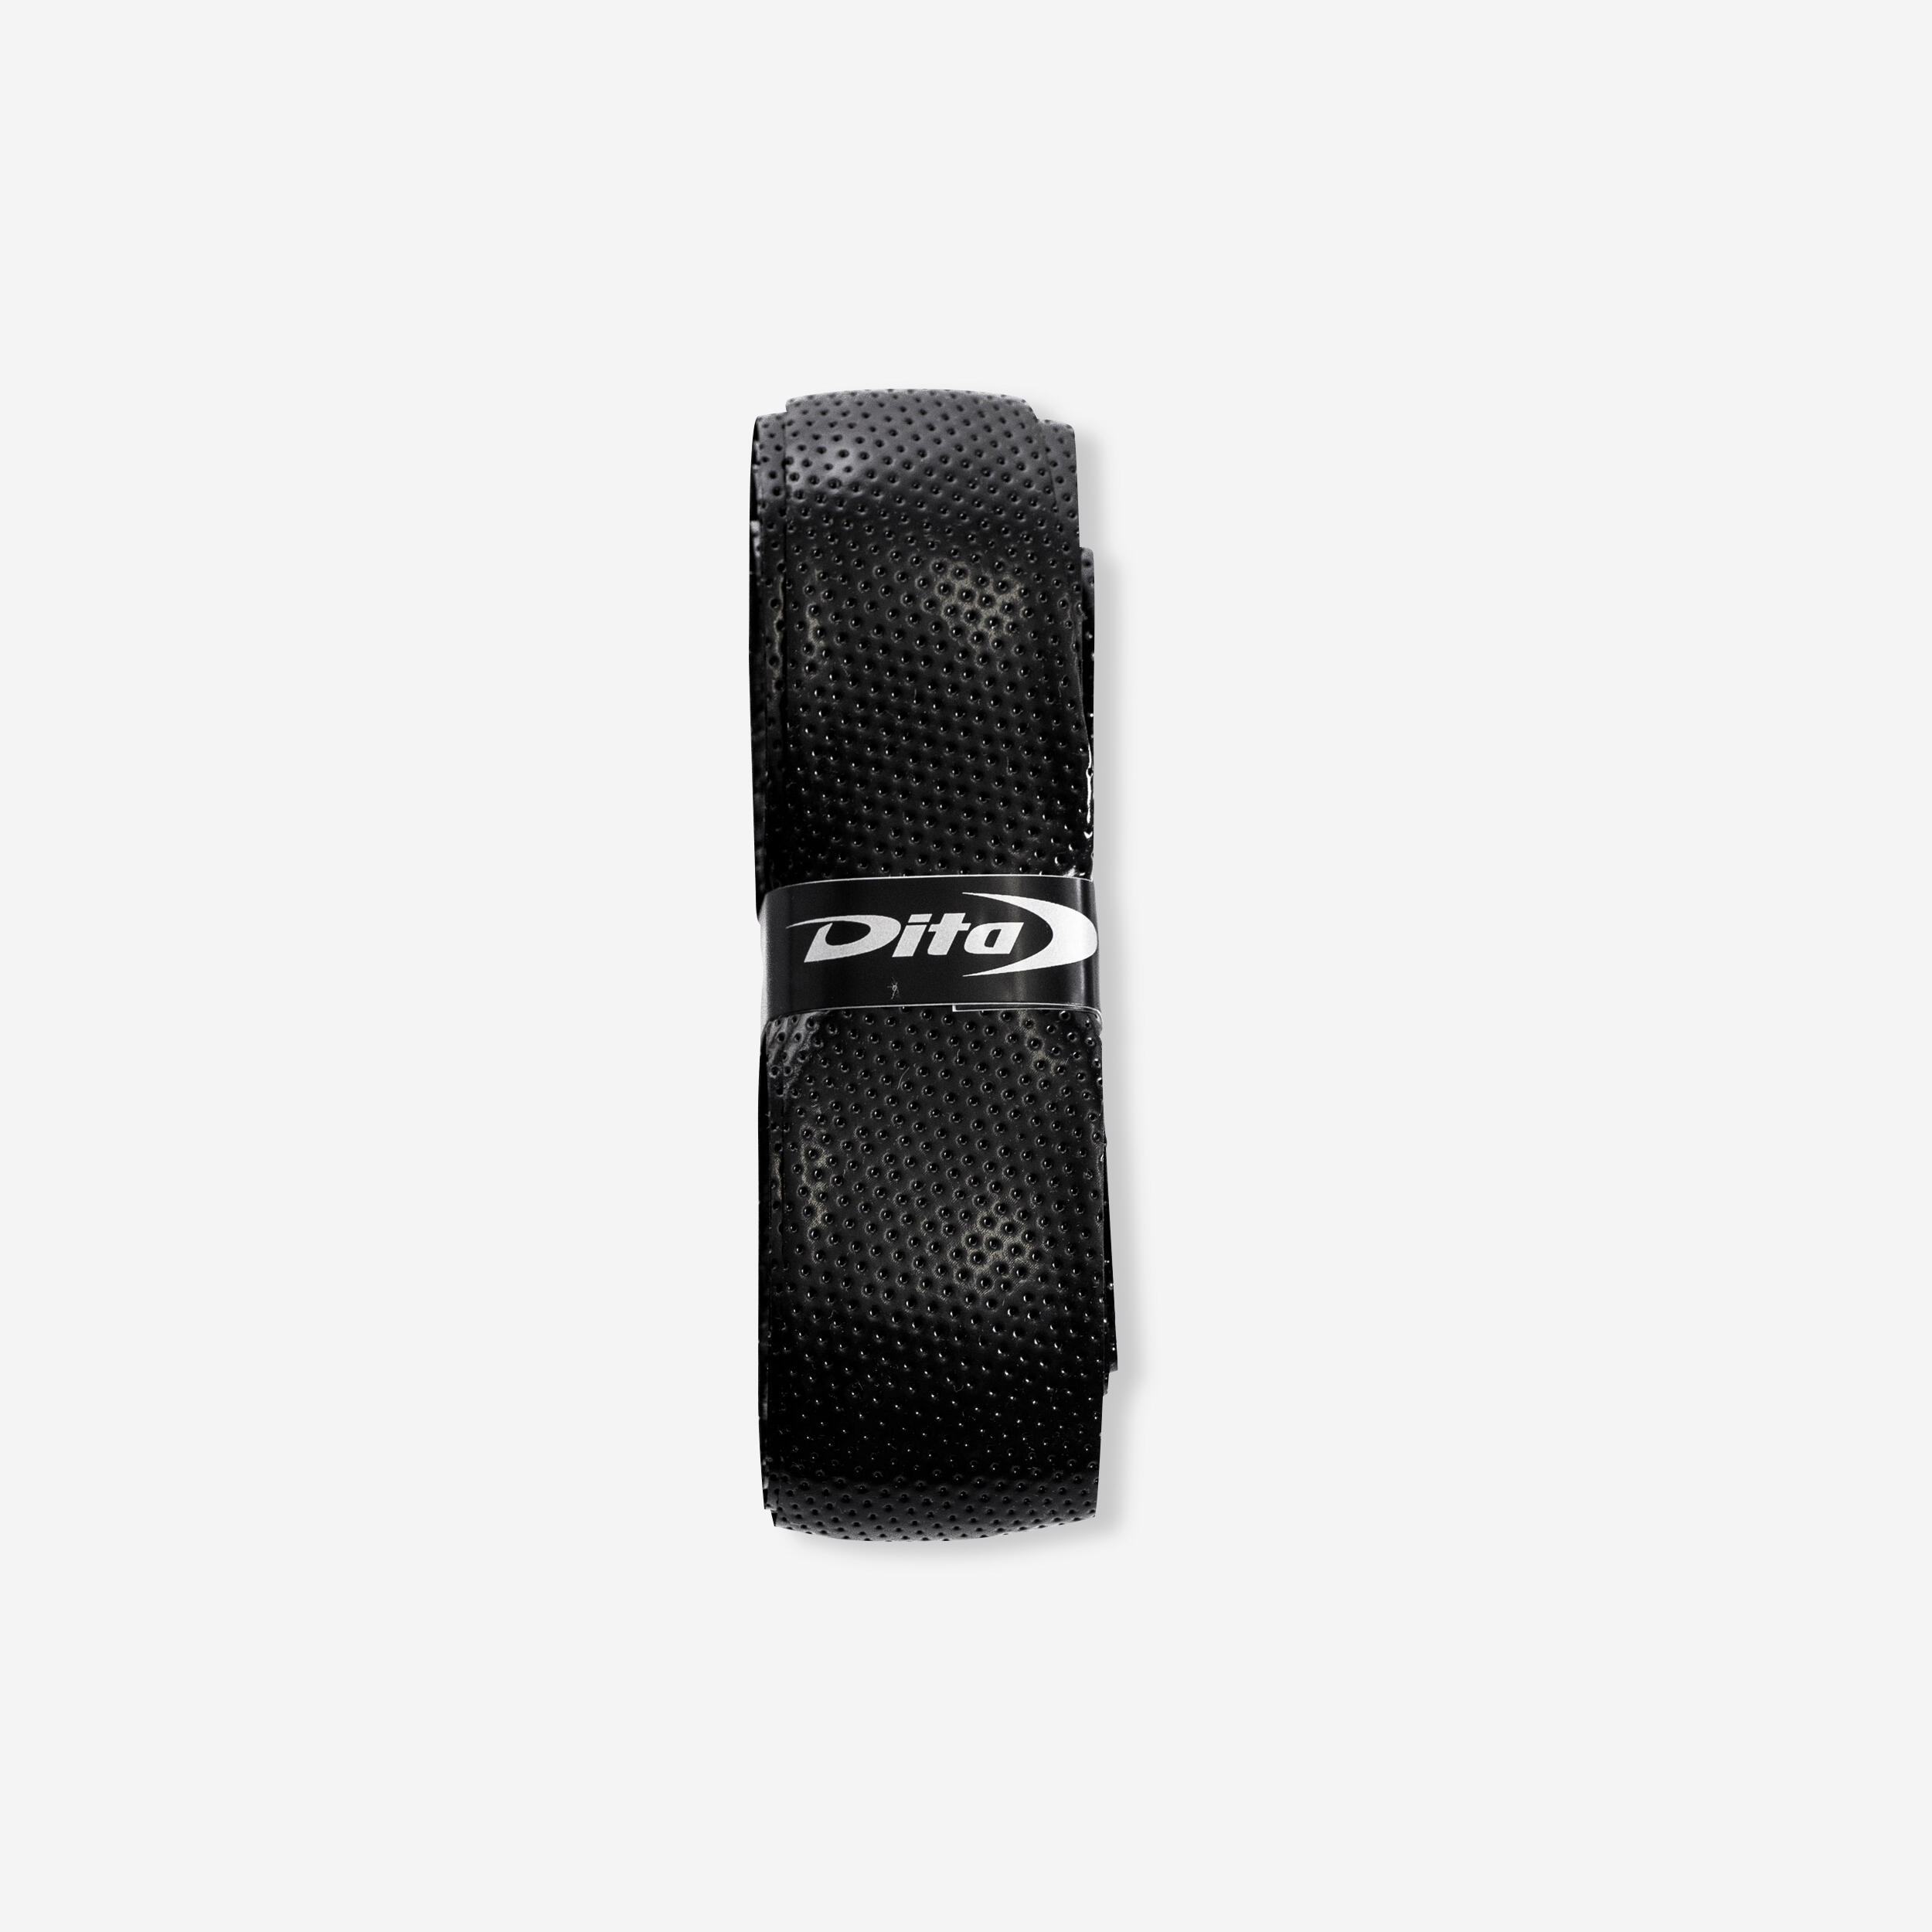 DITA Field Hockey Grip Protec - Soft Black